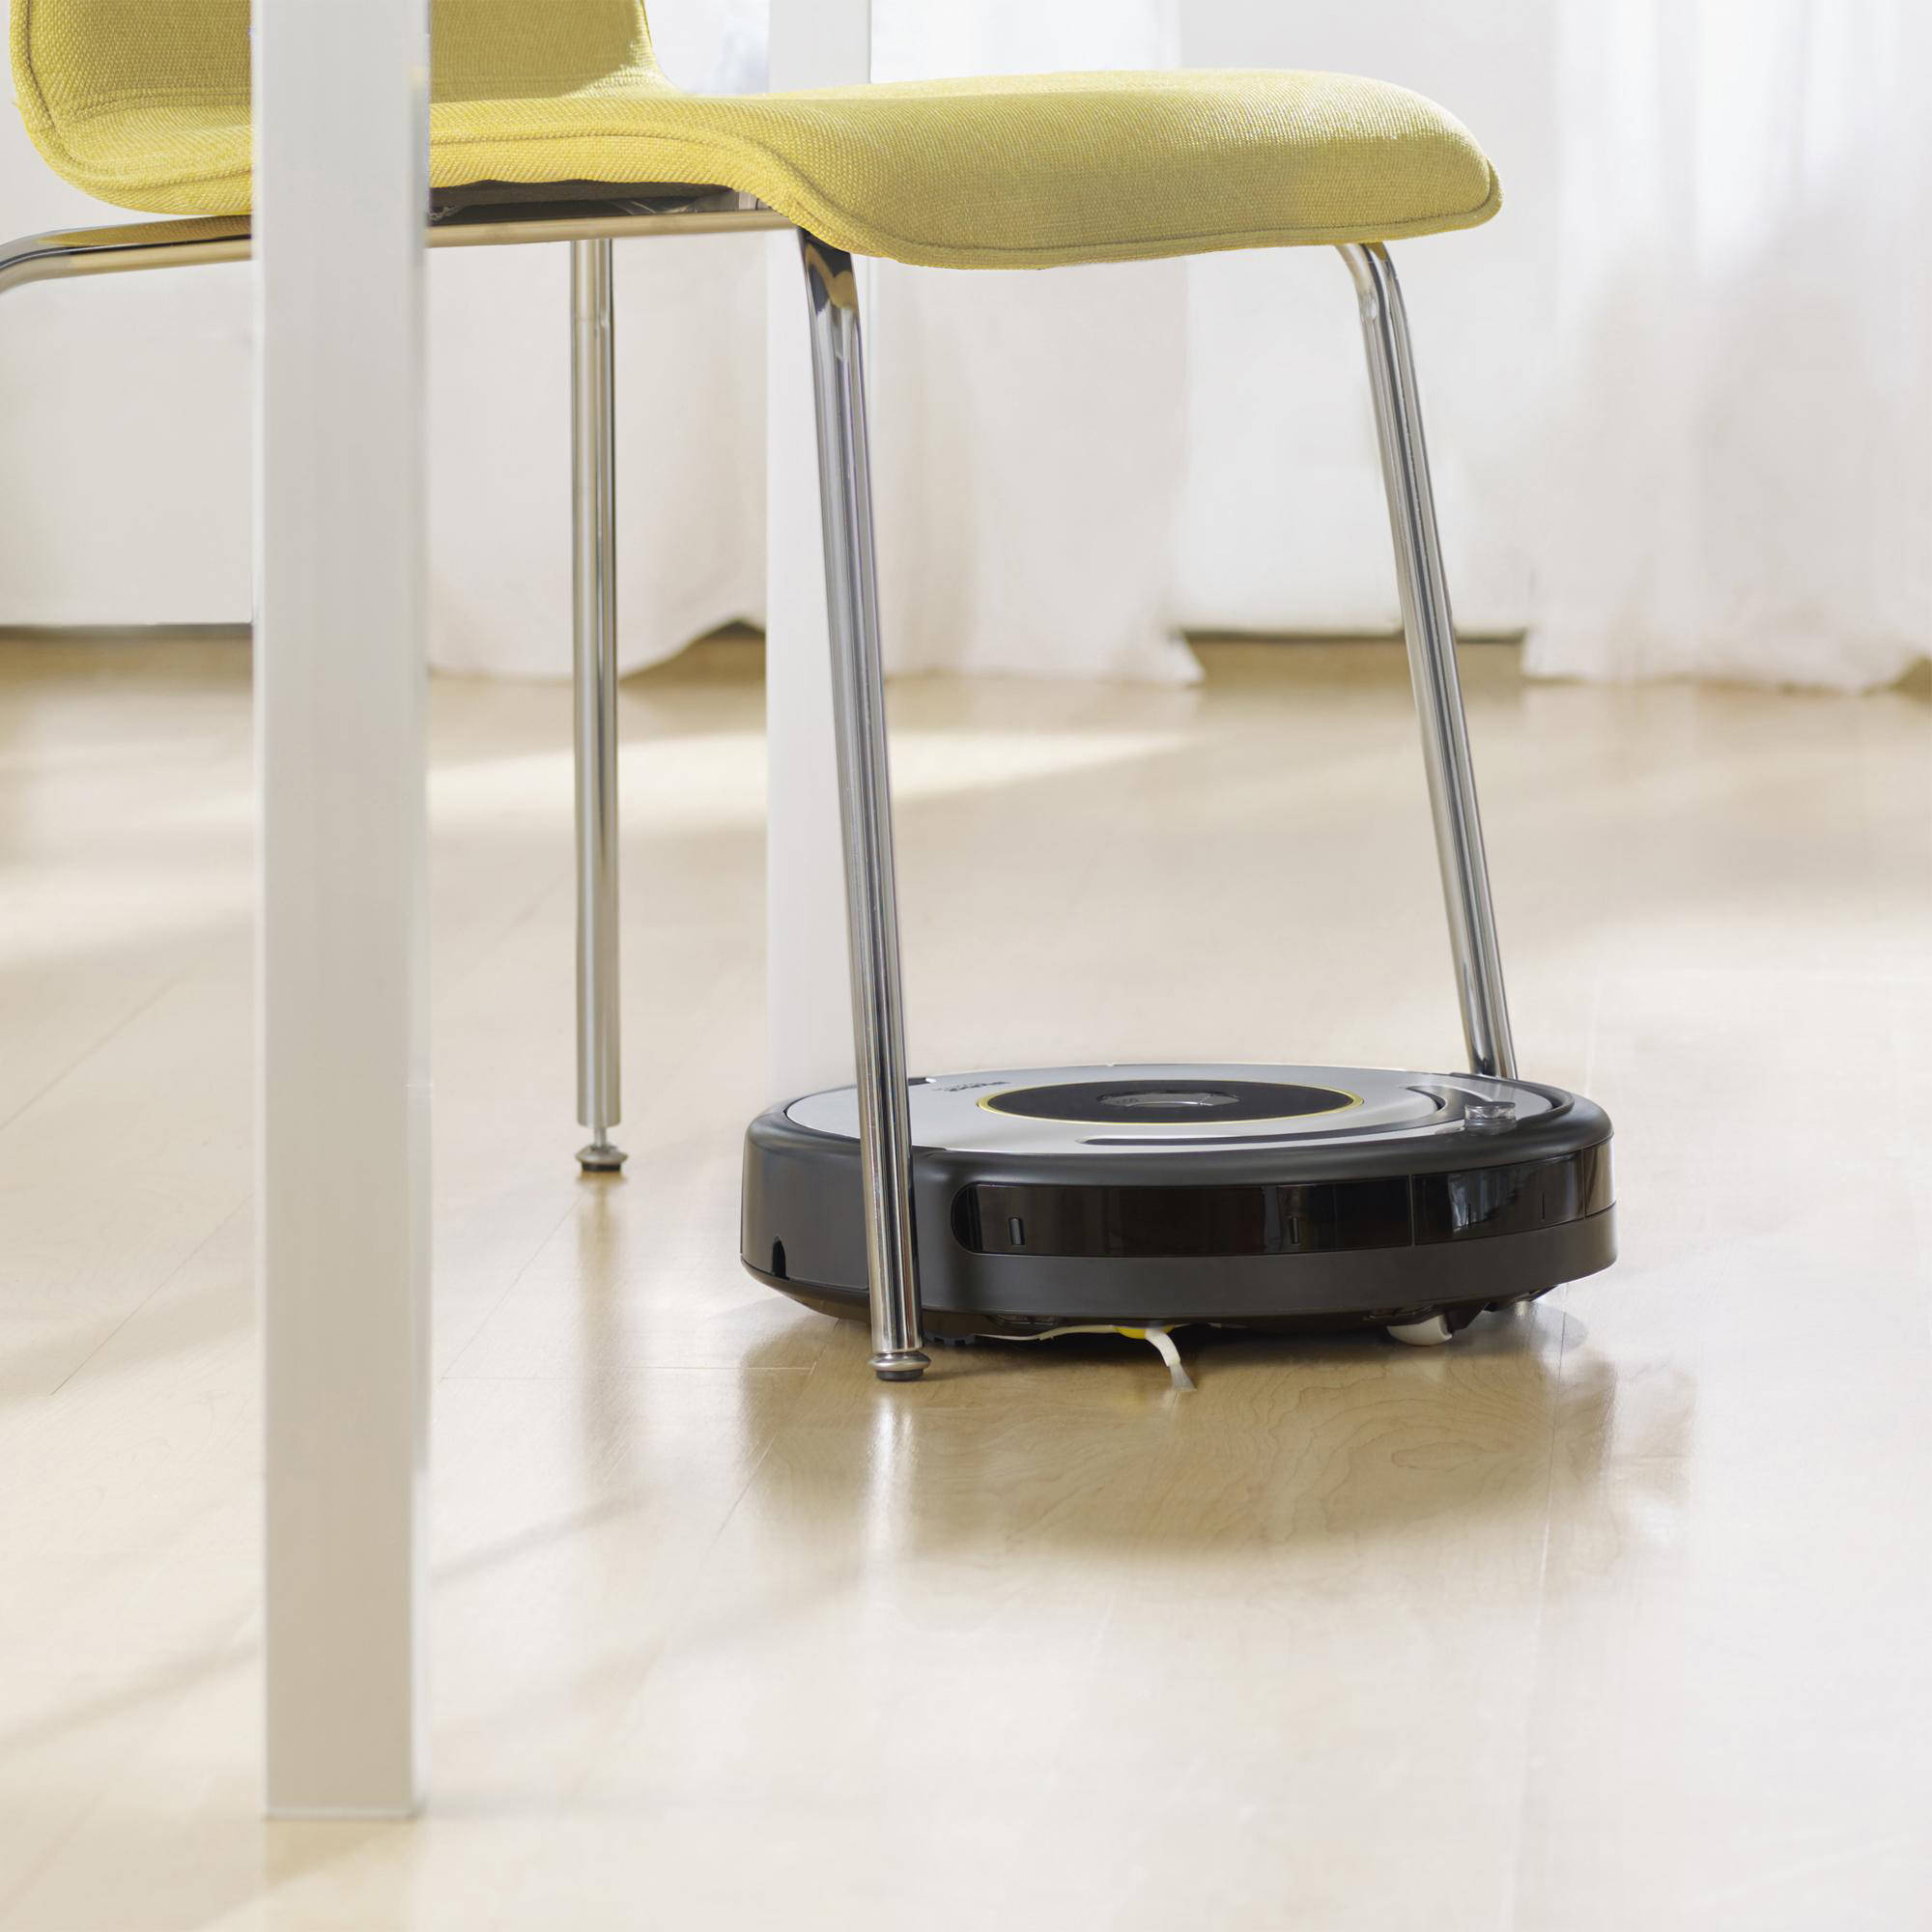 iRobot Roomba 618 Robot Vacuum - Good for Pet Hair, Carpets, Hard Floors, Self-Charging - image 2 of 6